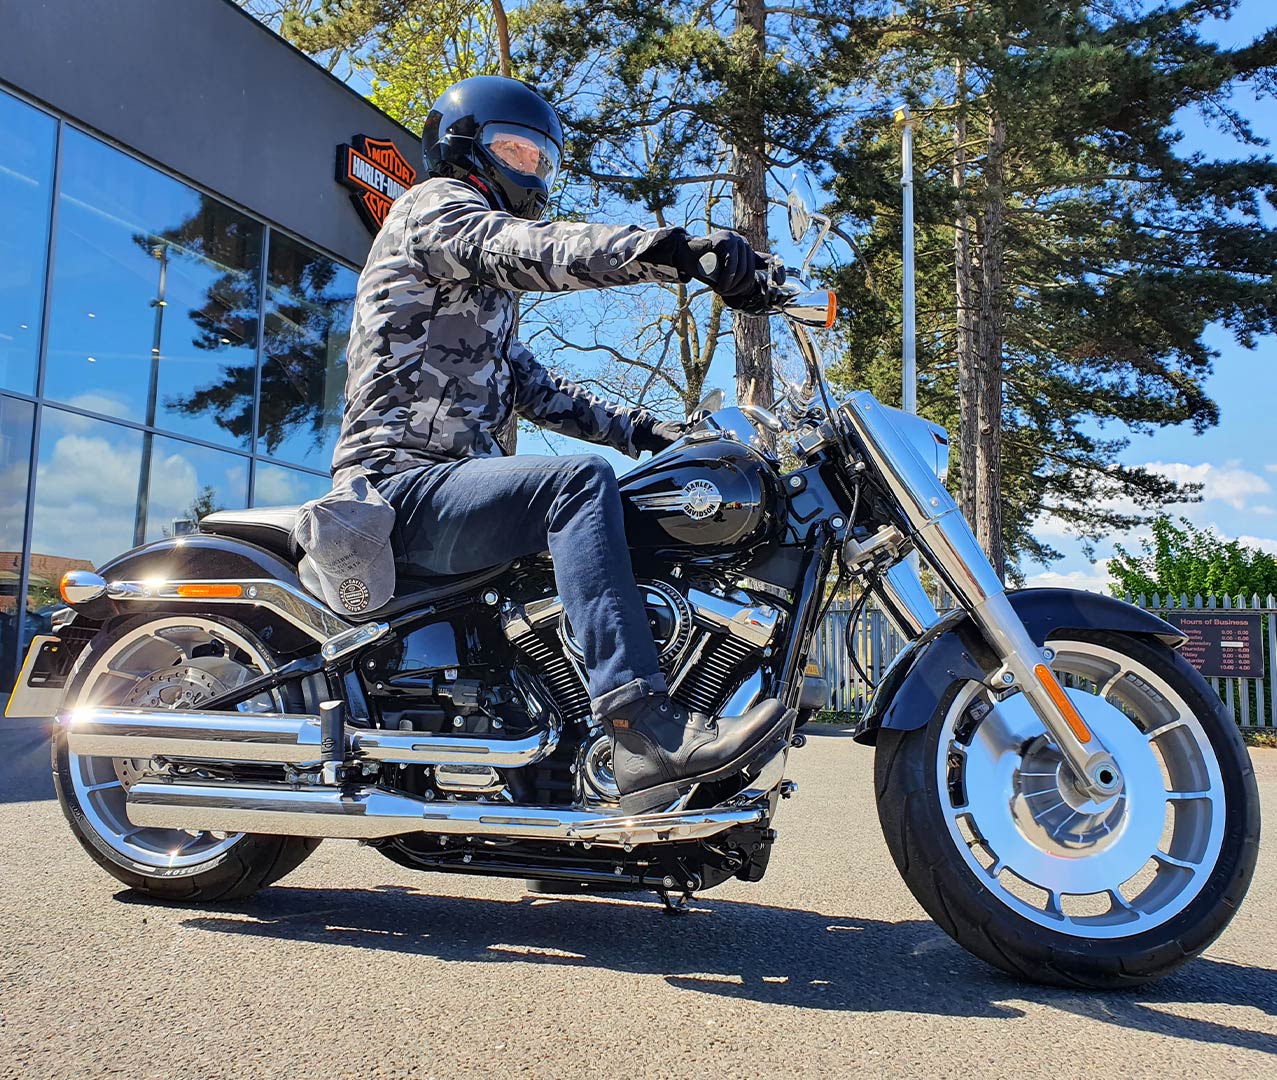 Get the Look - May Harley-Davidson Fatboy